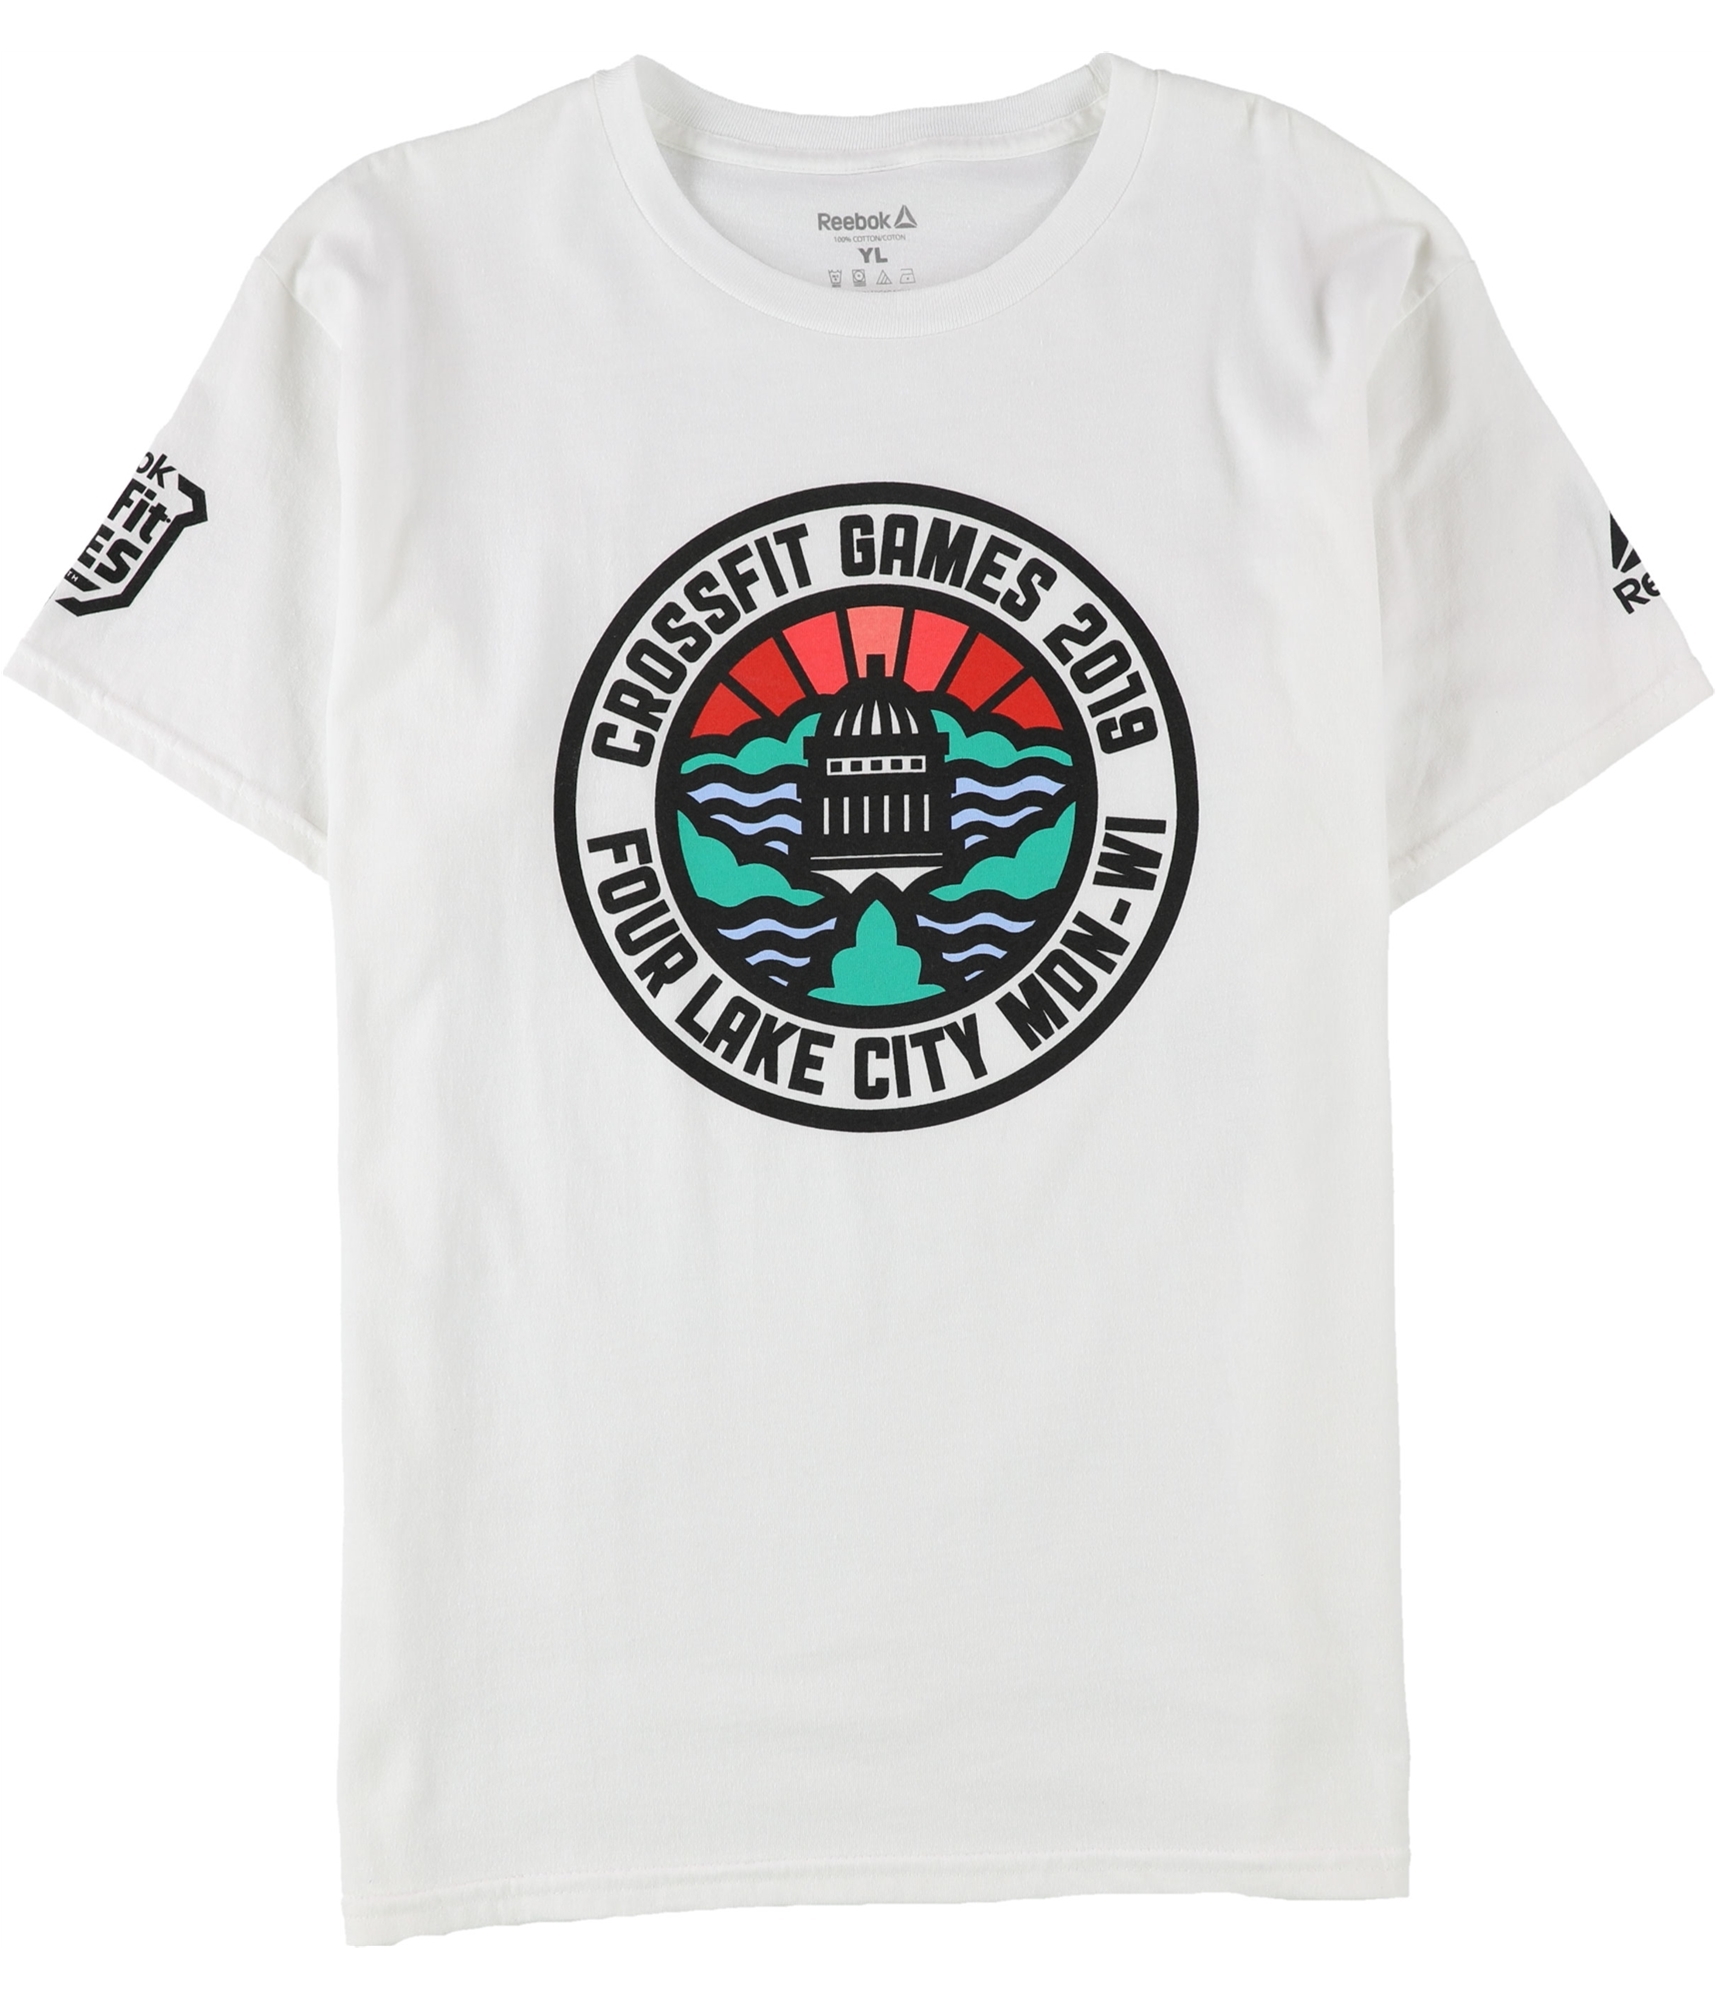 a Boys Reebok CrossFit 2019 Four Lake City MDN-WI Graphic T-Shirt Online |